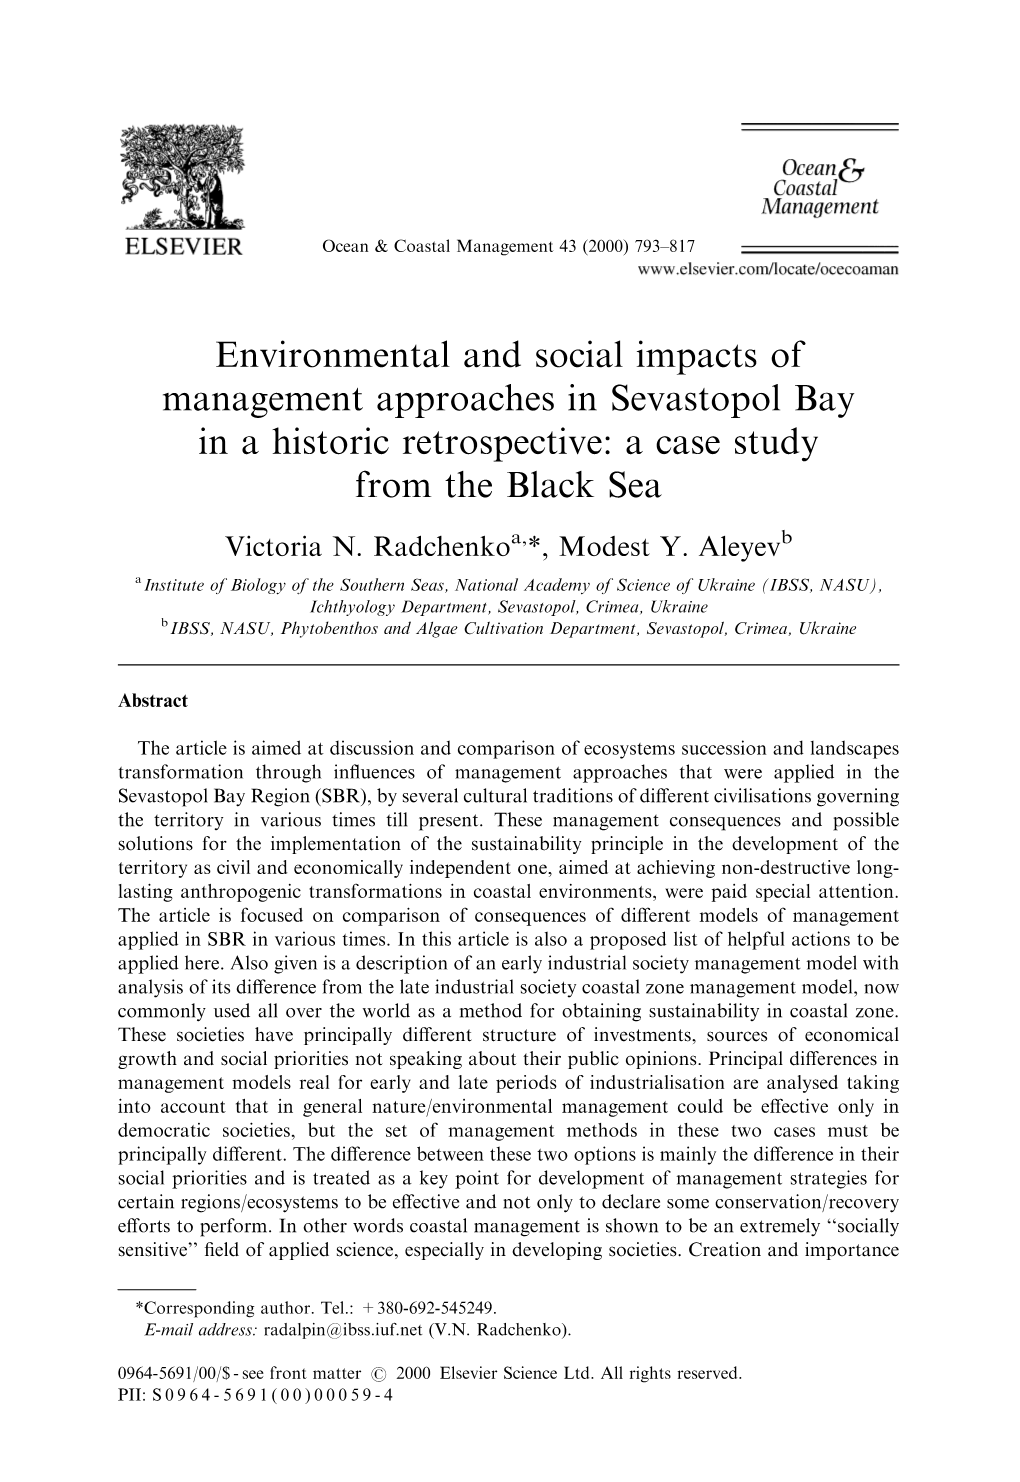 Radchenko & Aleyev. 2000. Enevironemental & Social Impacts